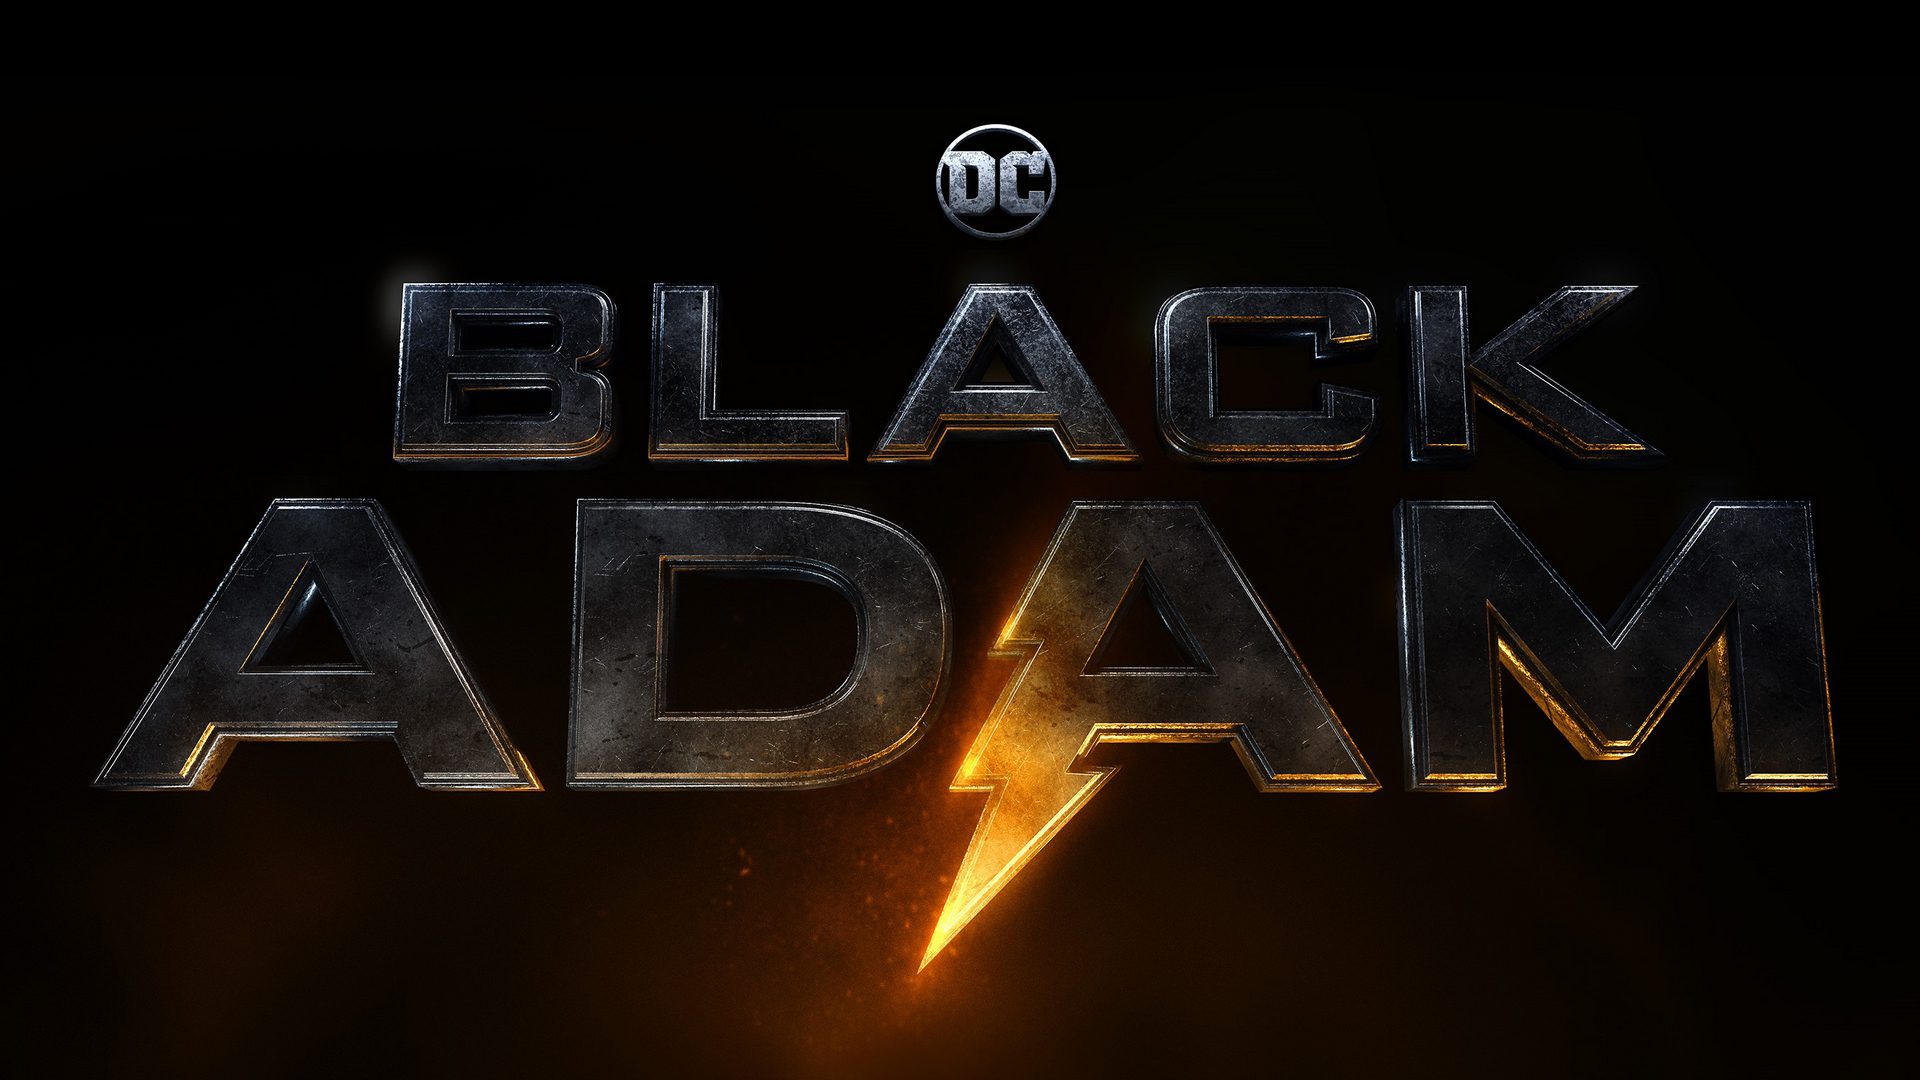 Black Adam © Warner Bros